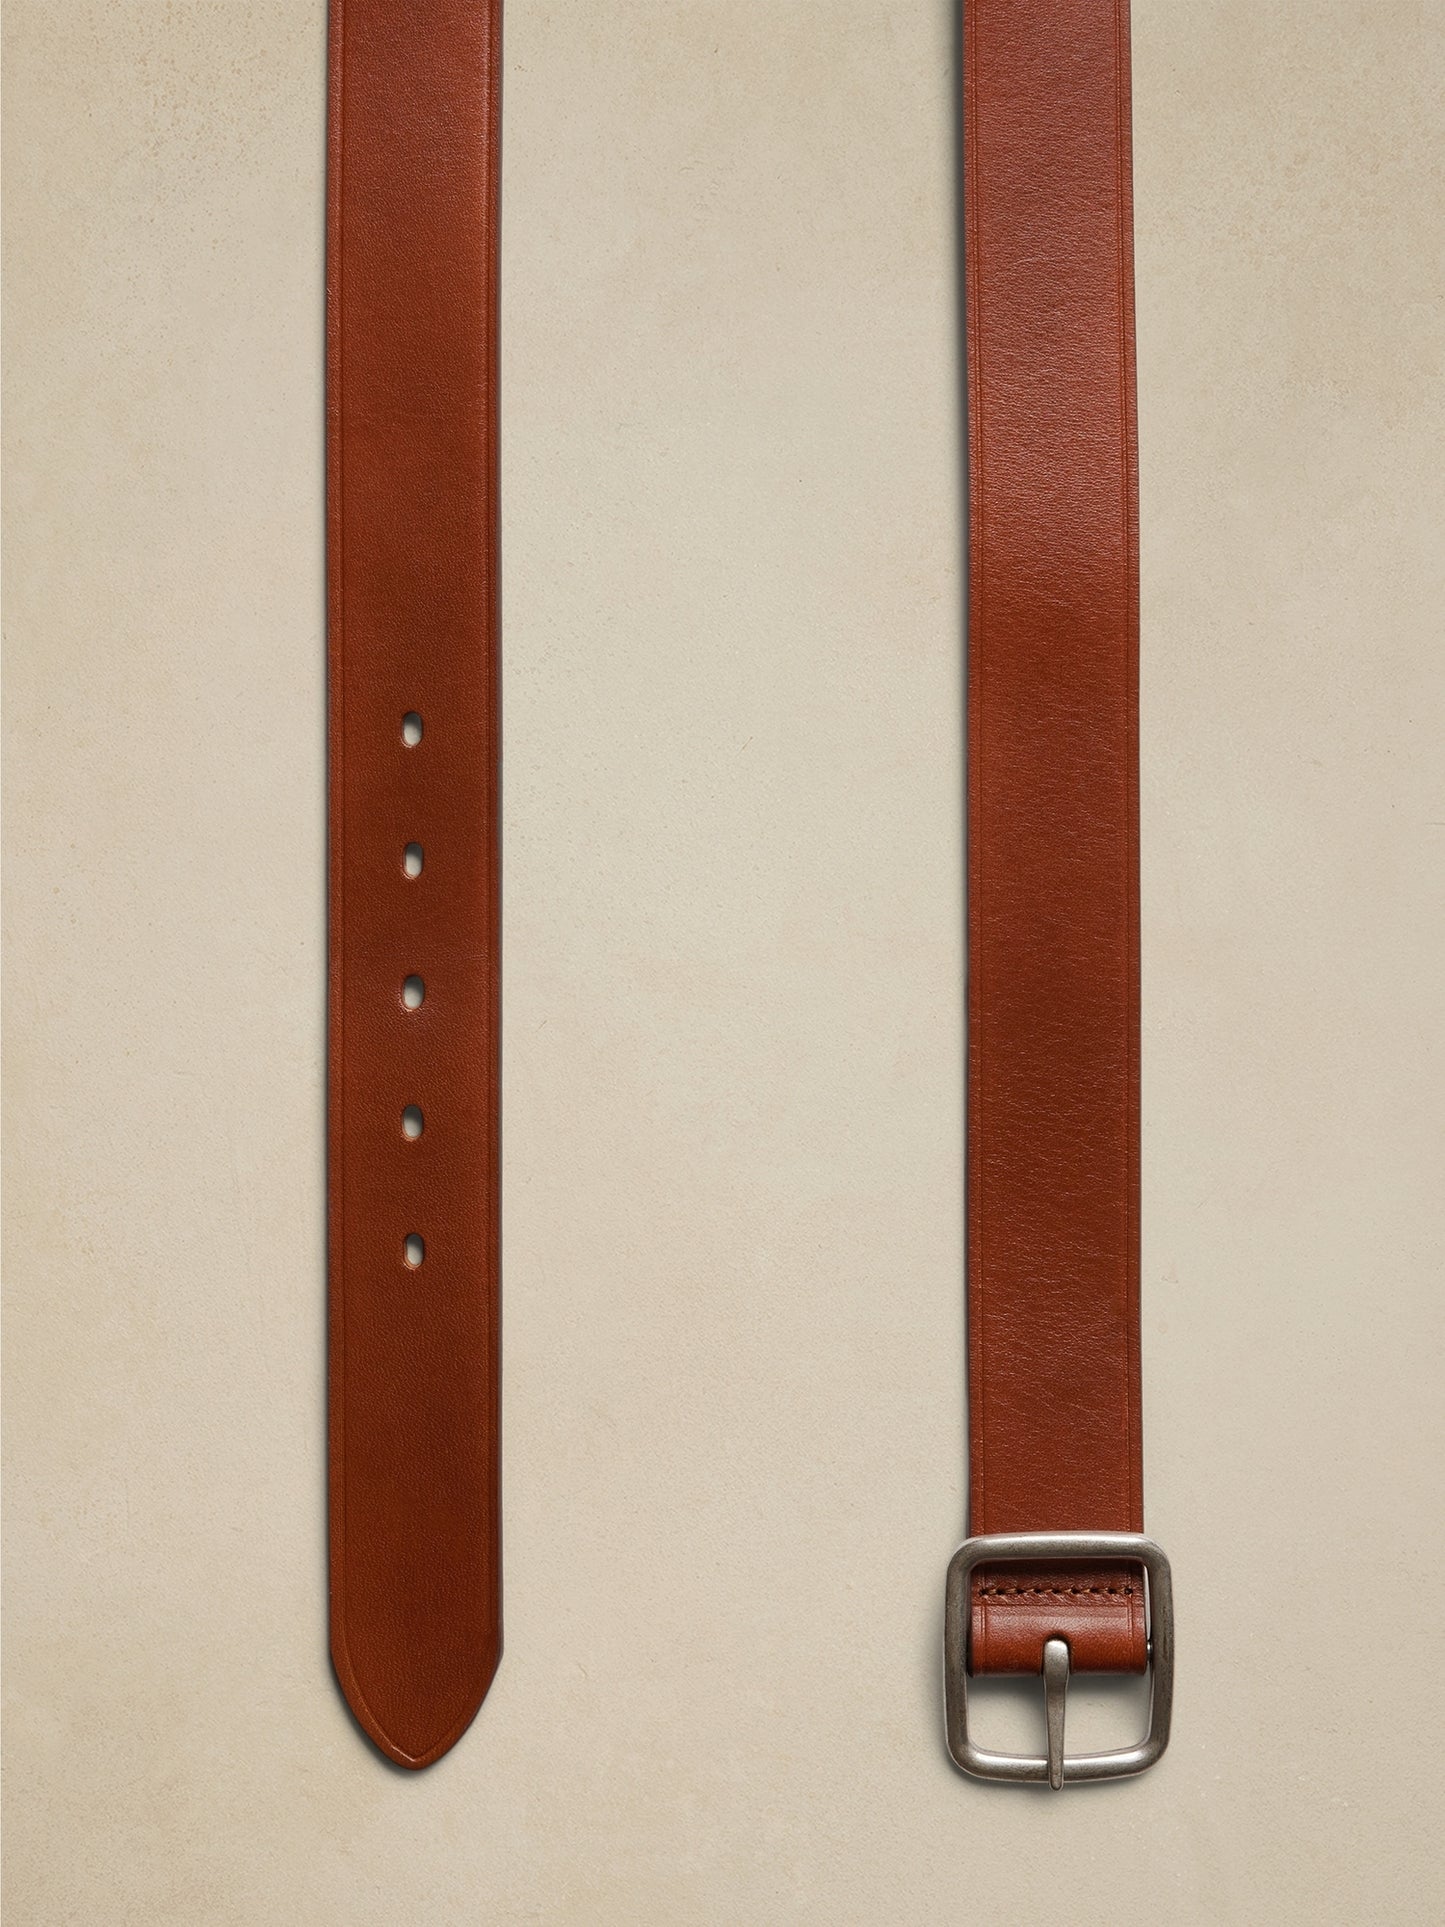 Leather Chino Belt